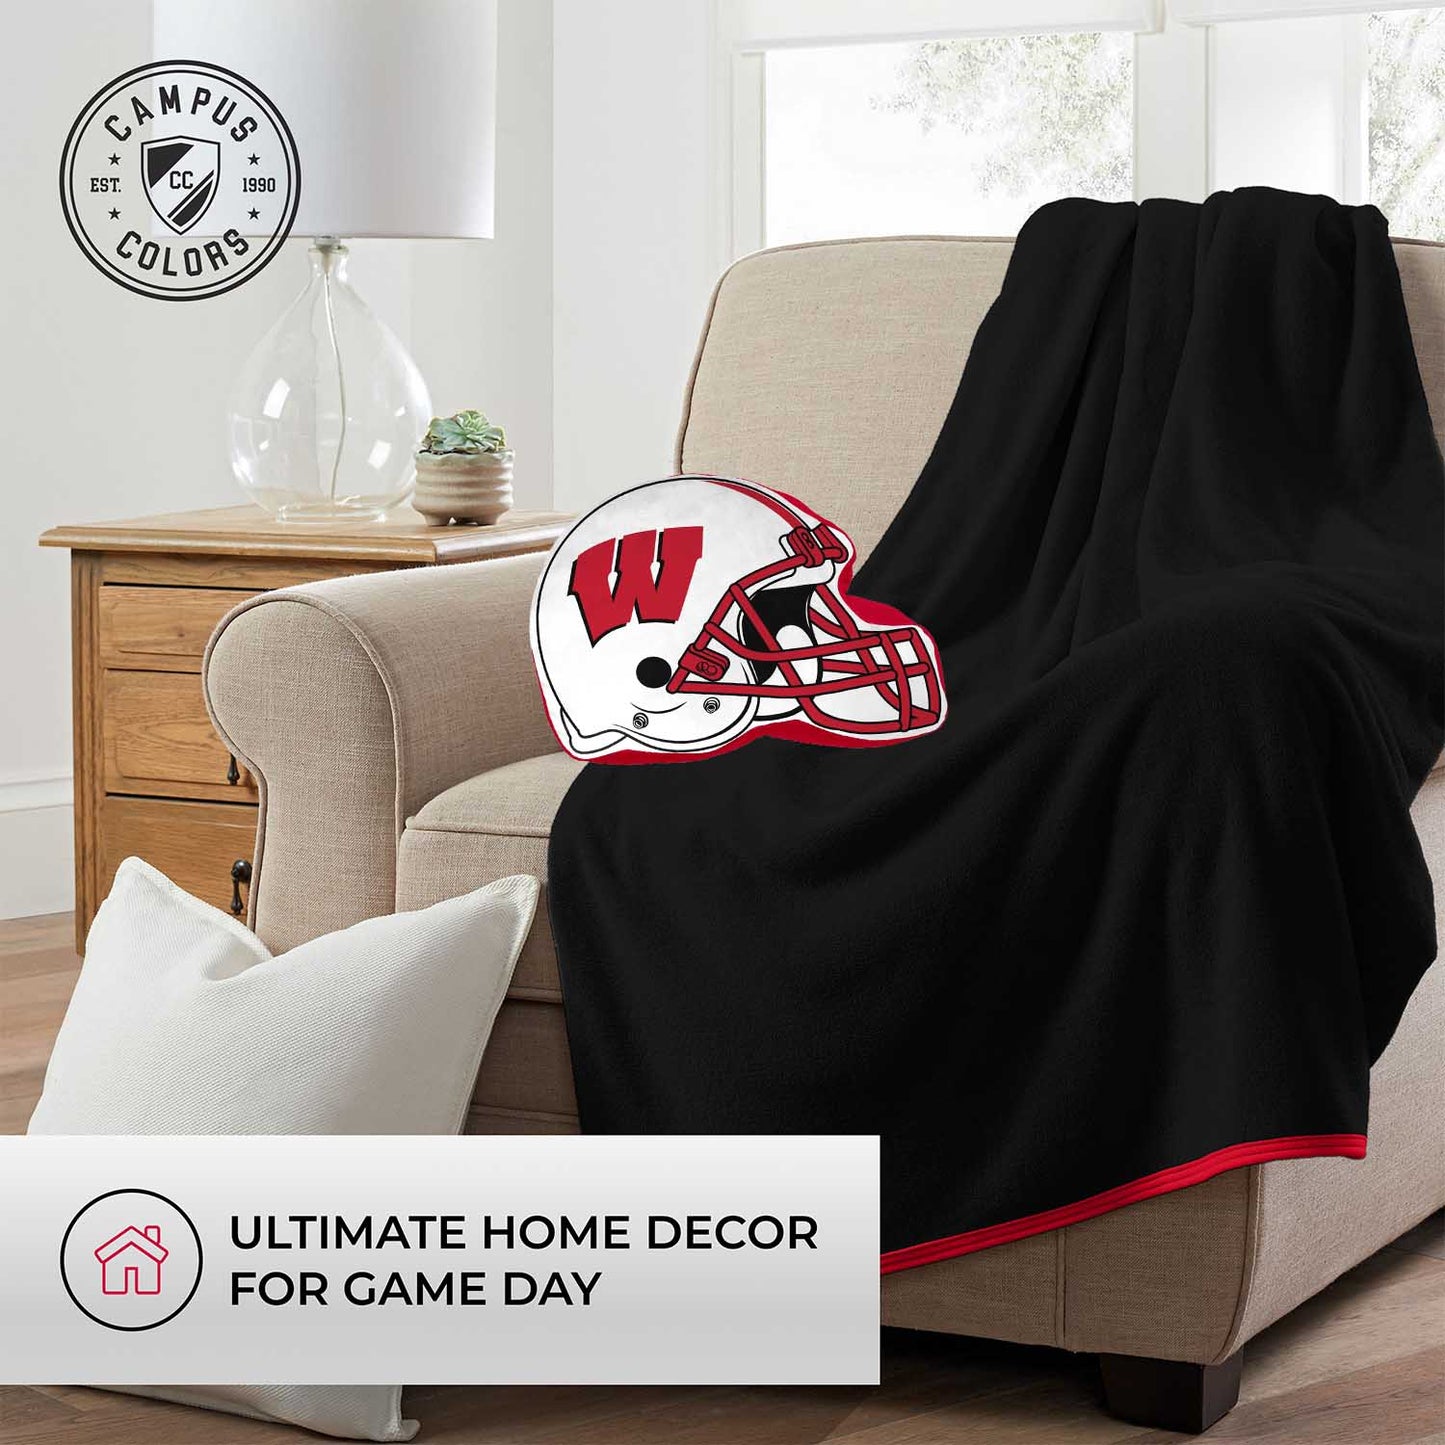 Wisconsin Badgers NCAA Helmet Super Soft Football Pillow - Red